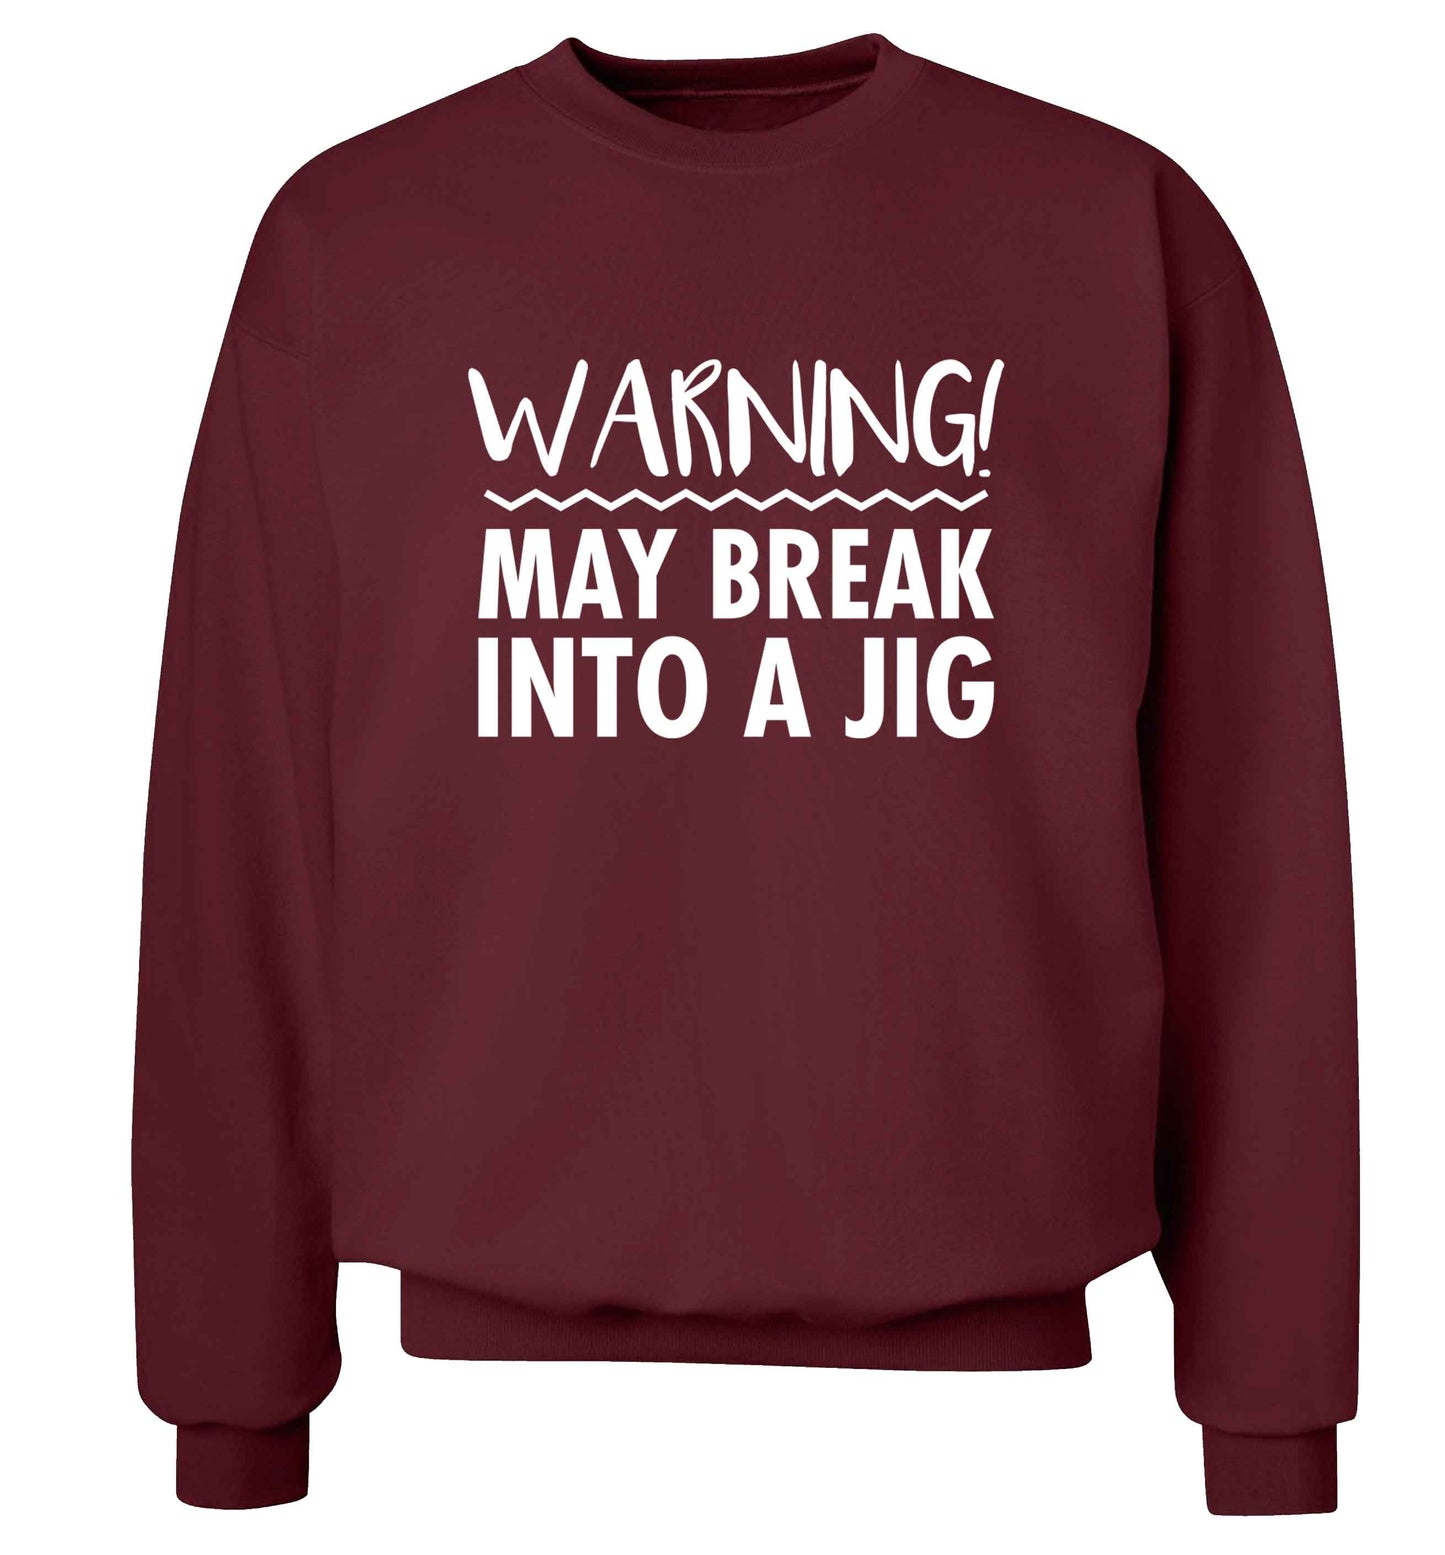 Warning may break into a jig adult's unisex maroon sweater 2XL